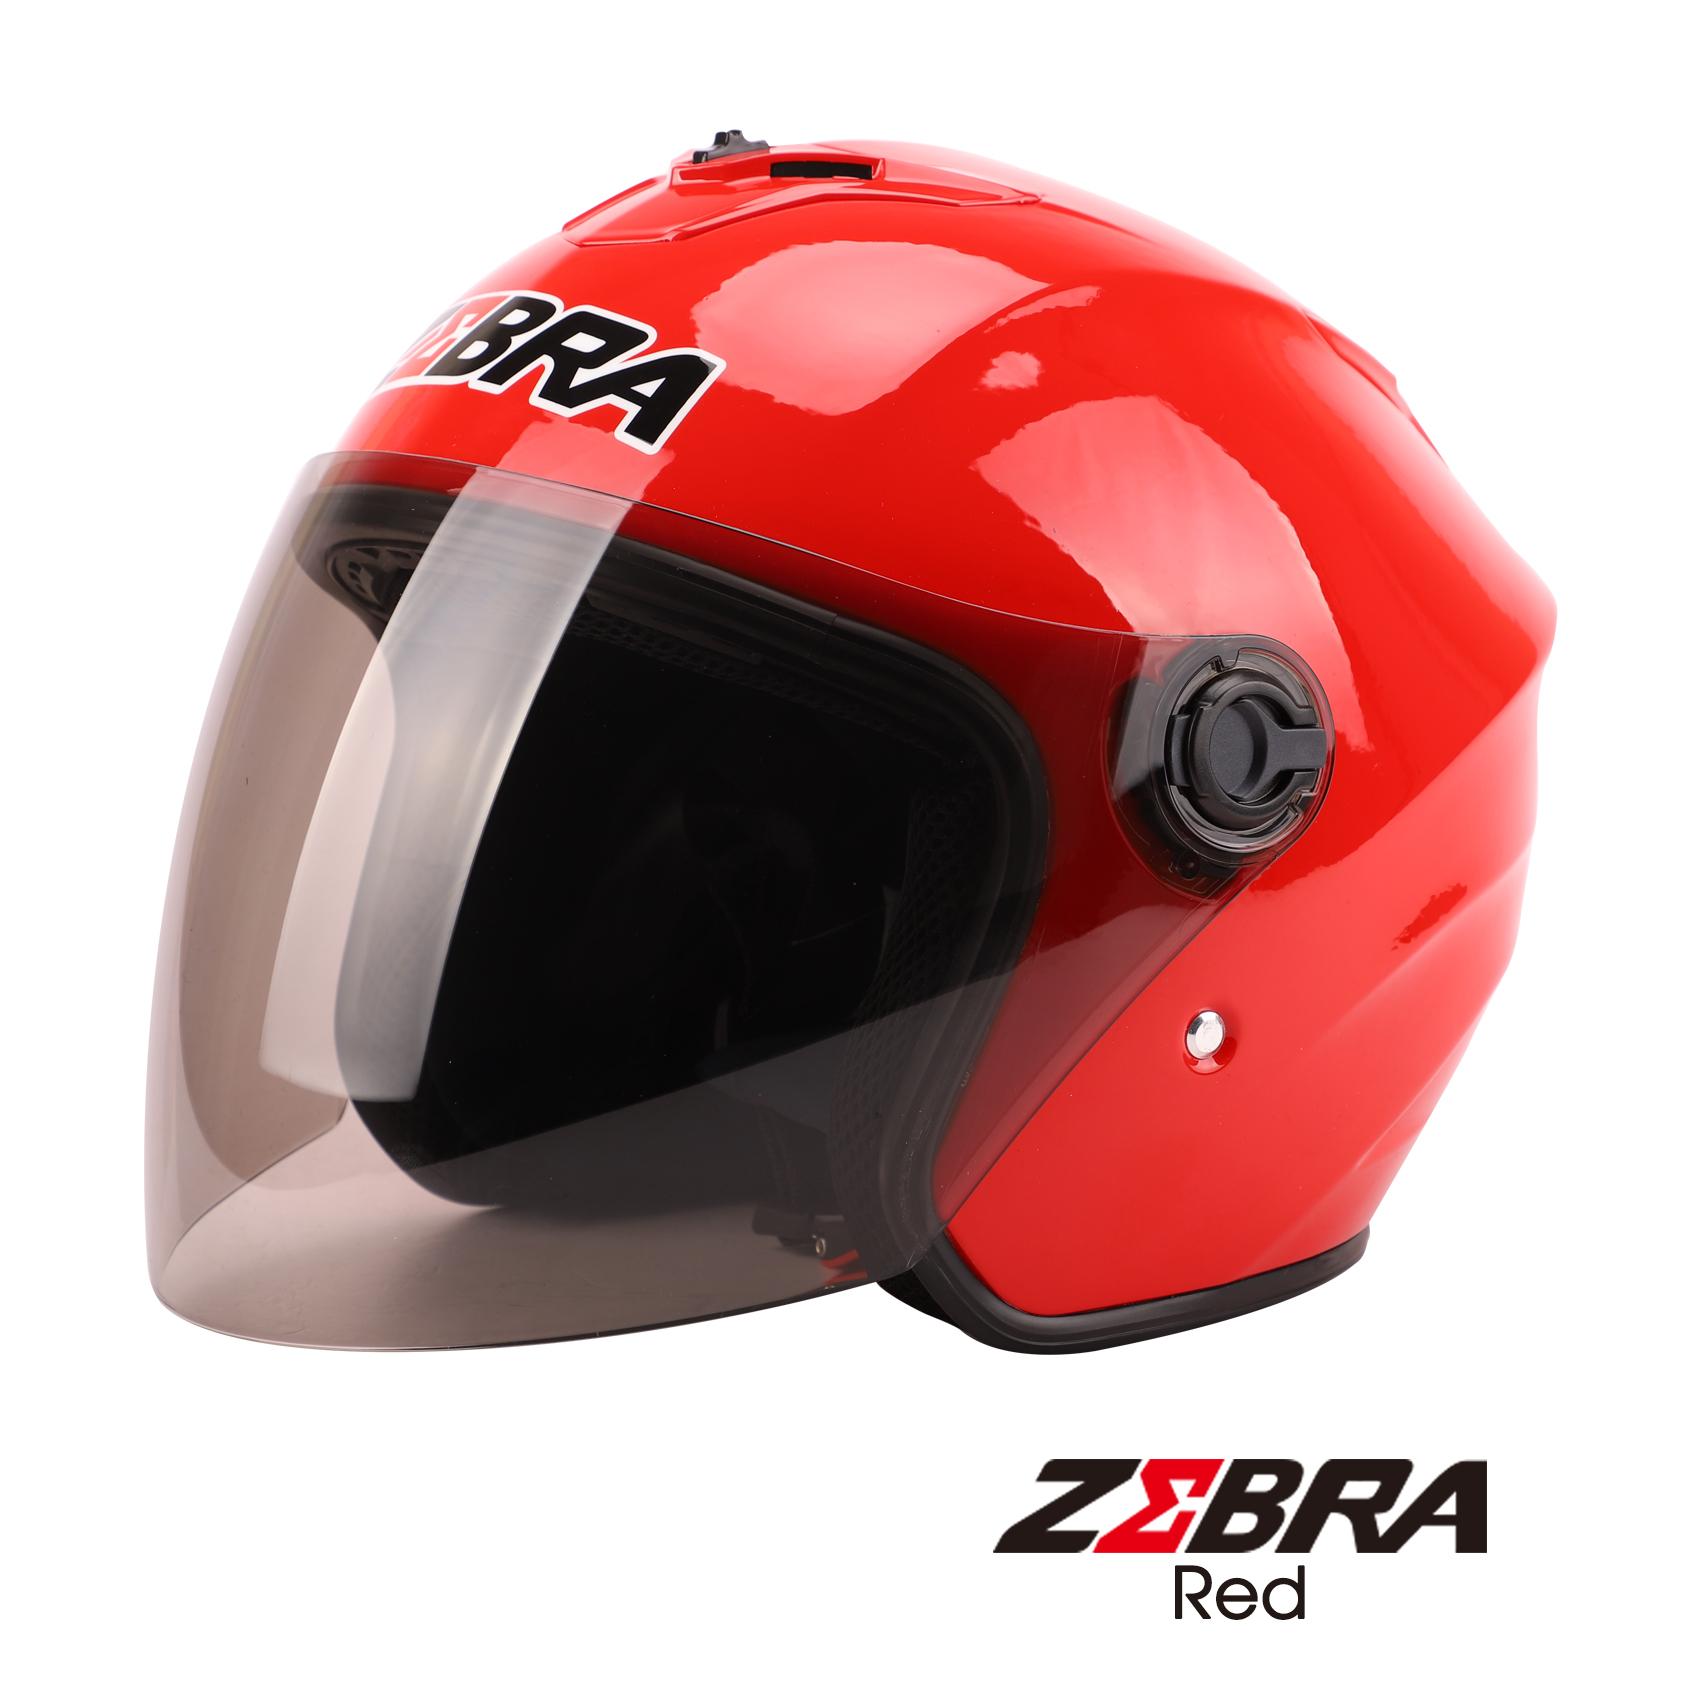 Zebra Helmet Size Chart